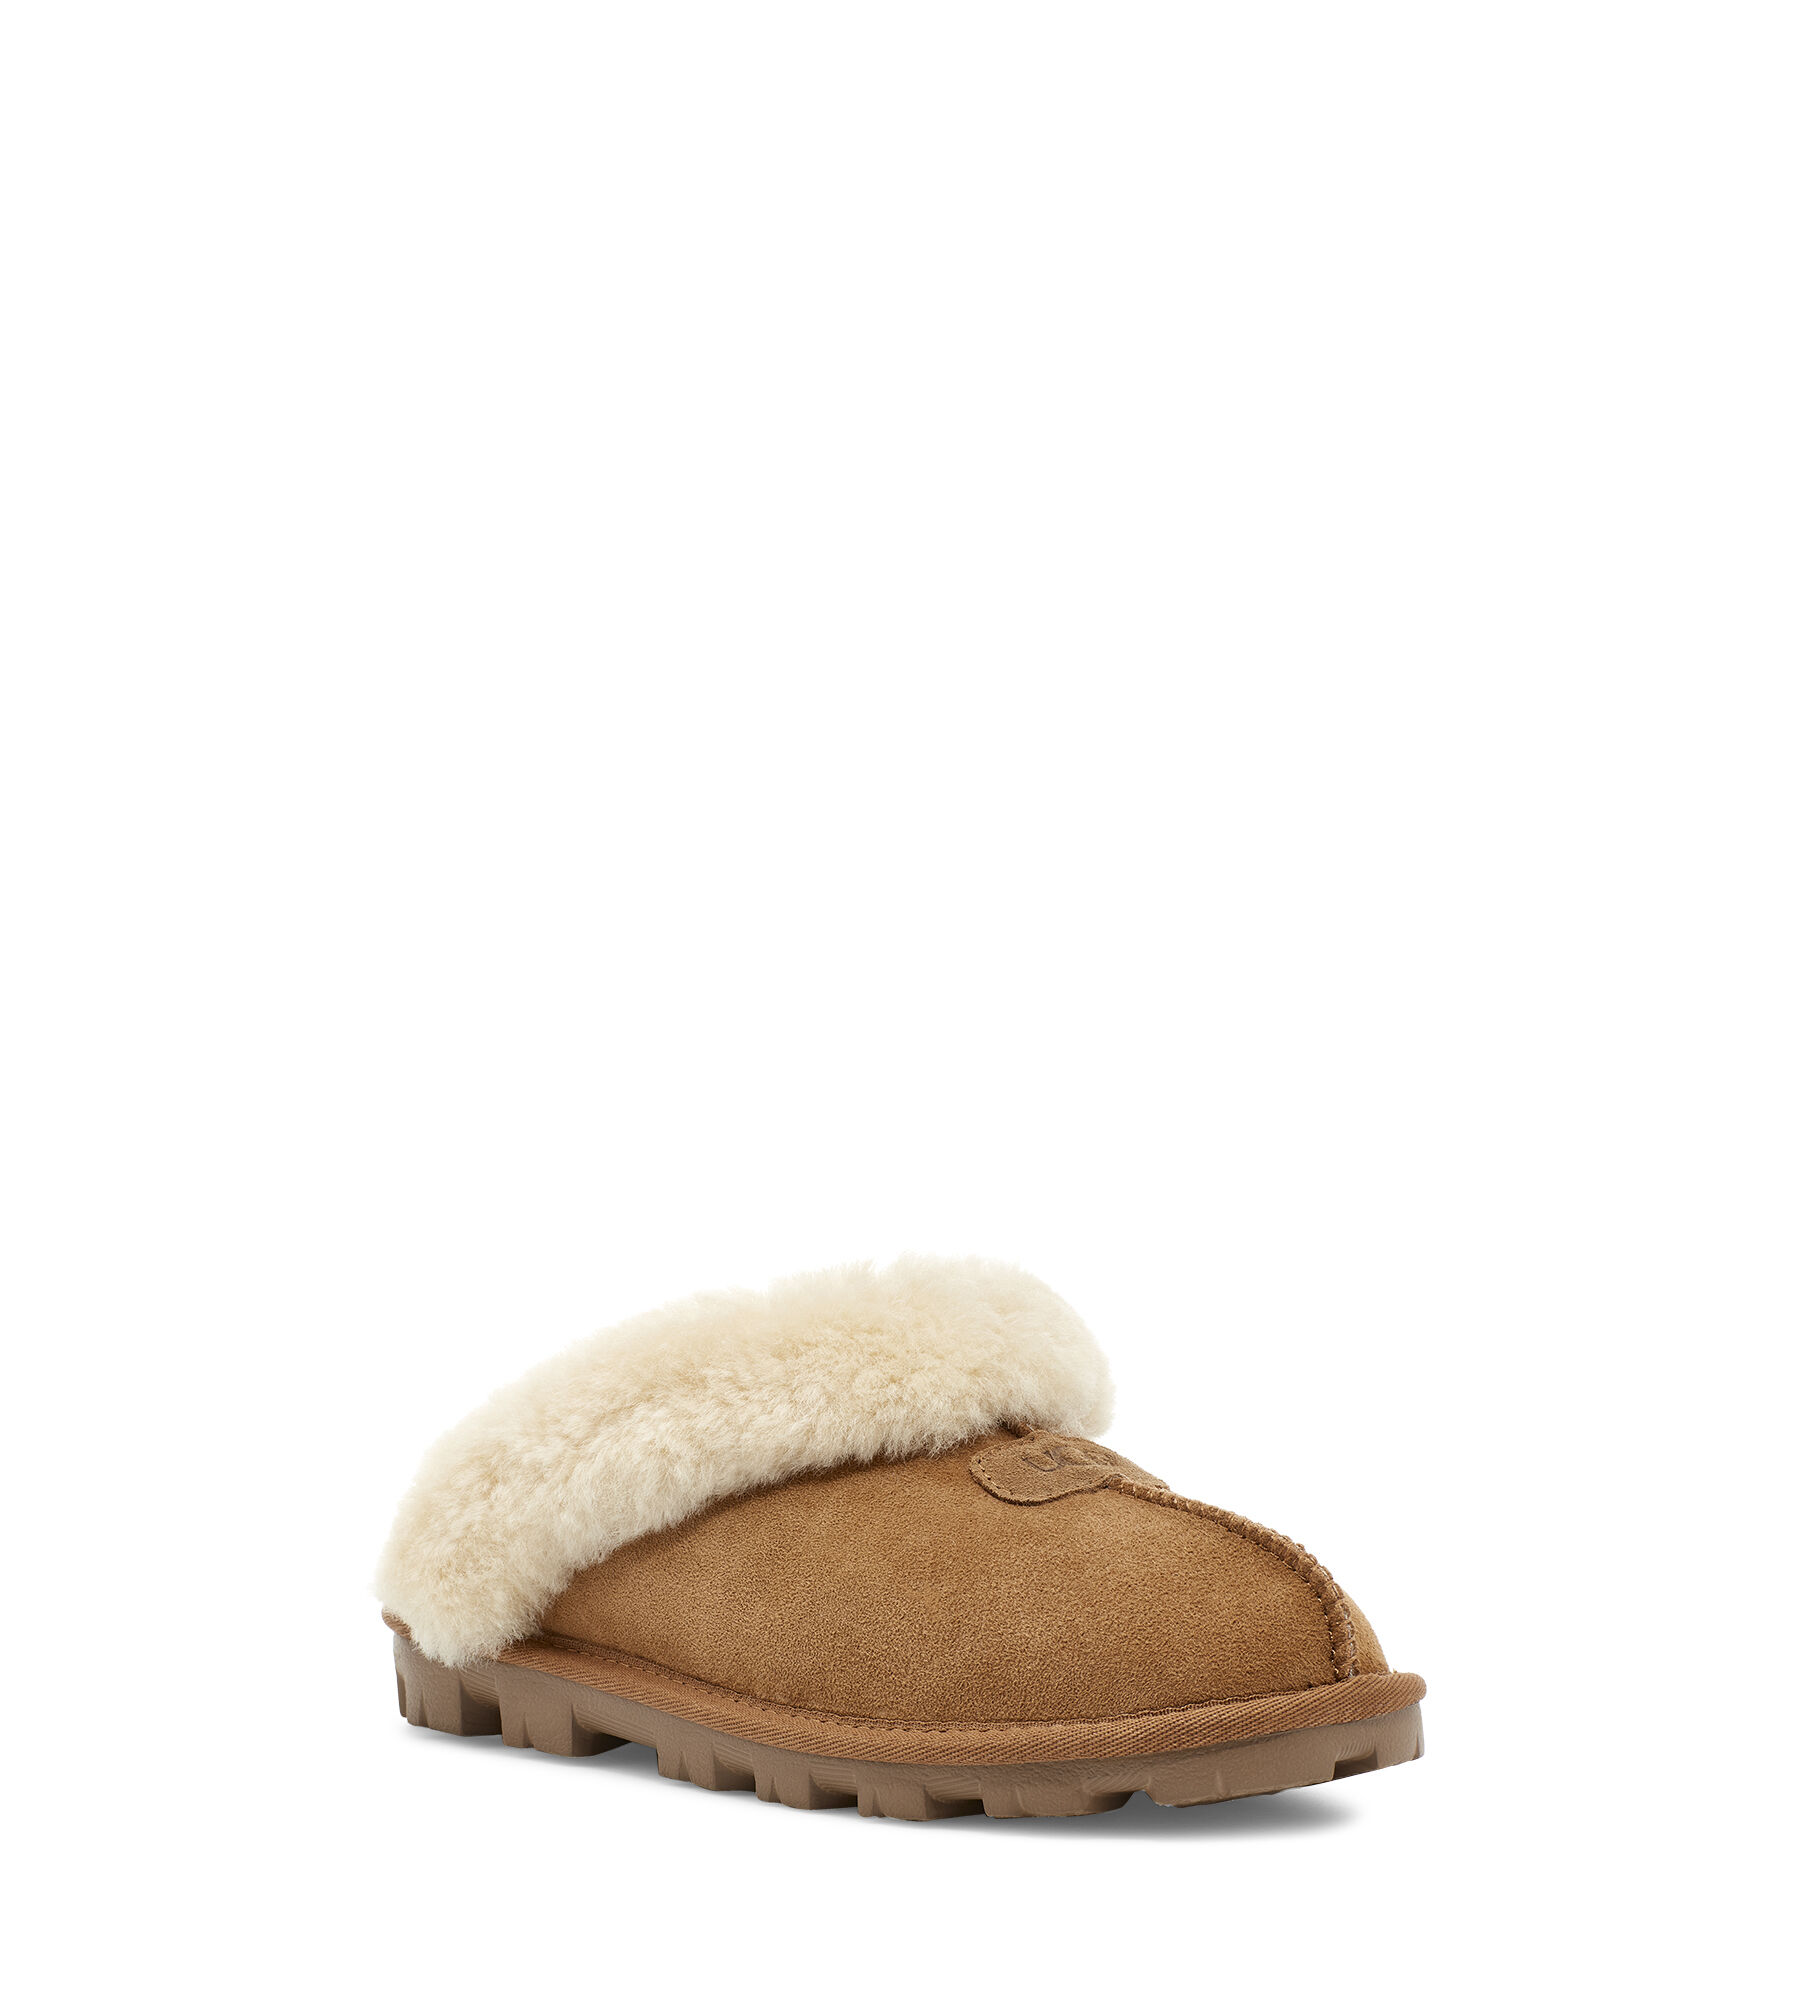 ugg slippers women size 8